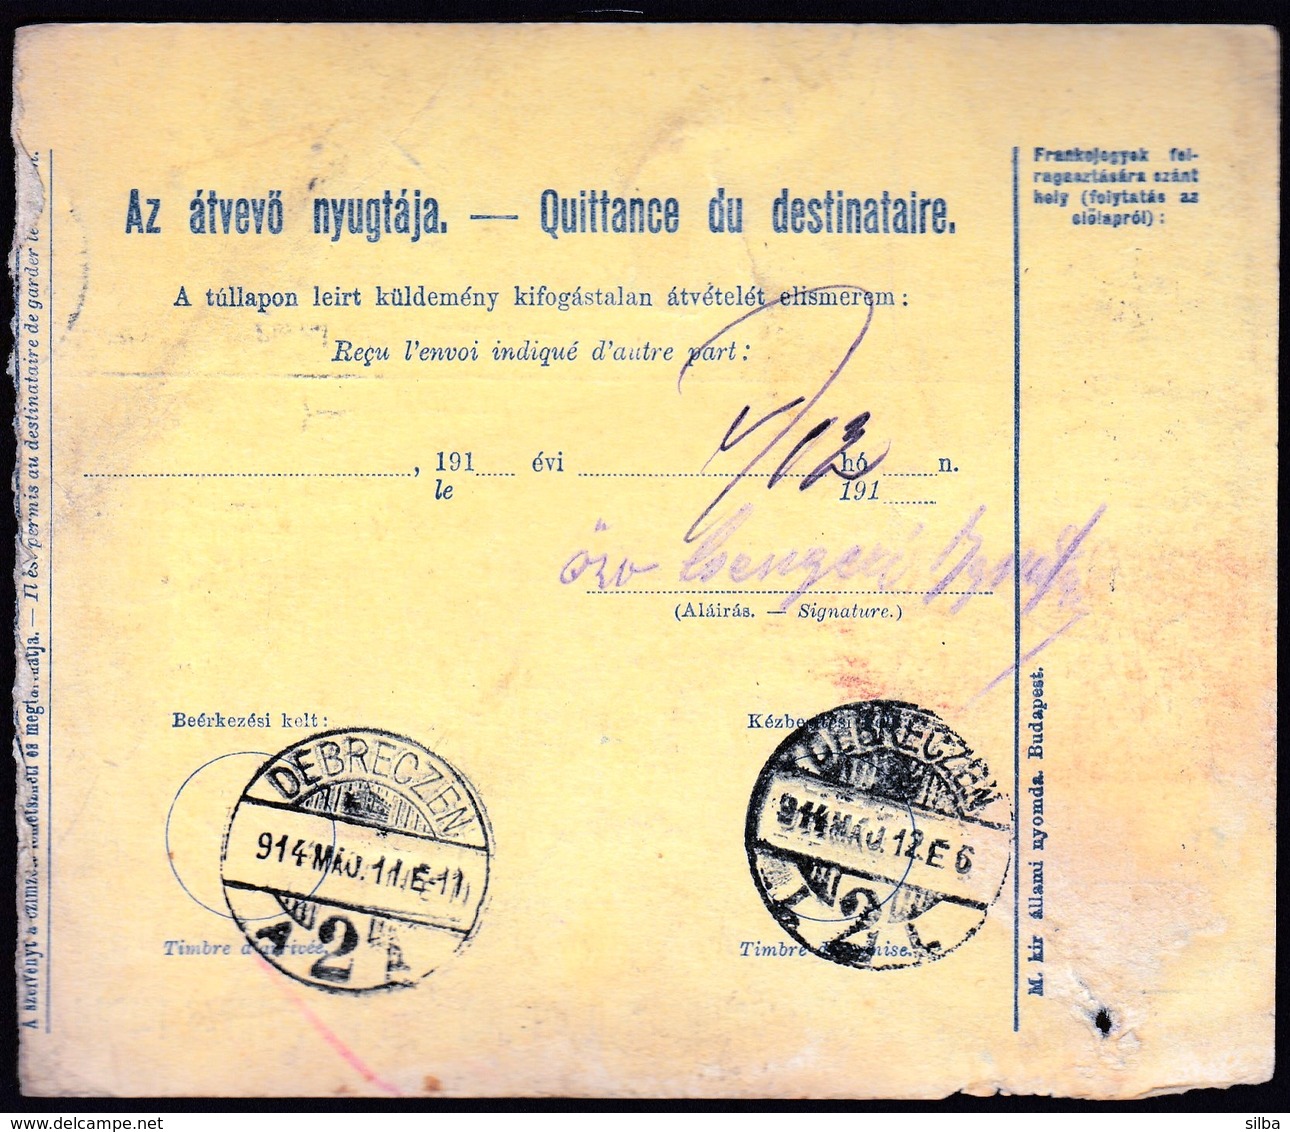 Hungary Maramanossziget 1914 / Parcel Post, Postai Szallitolevel, Bulletin D' Expedition / To Debreczen - Parcel Post